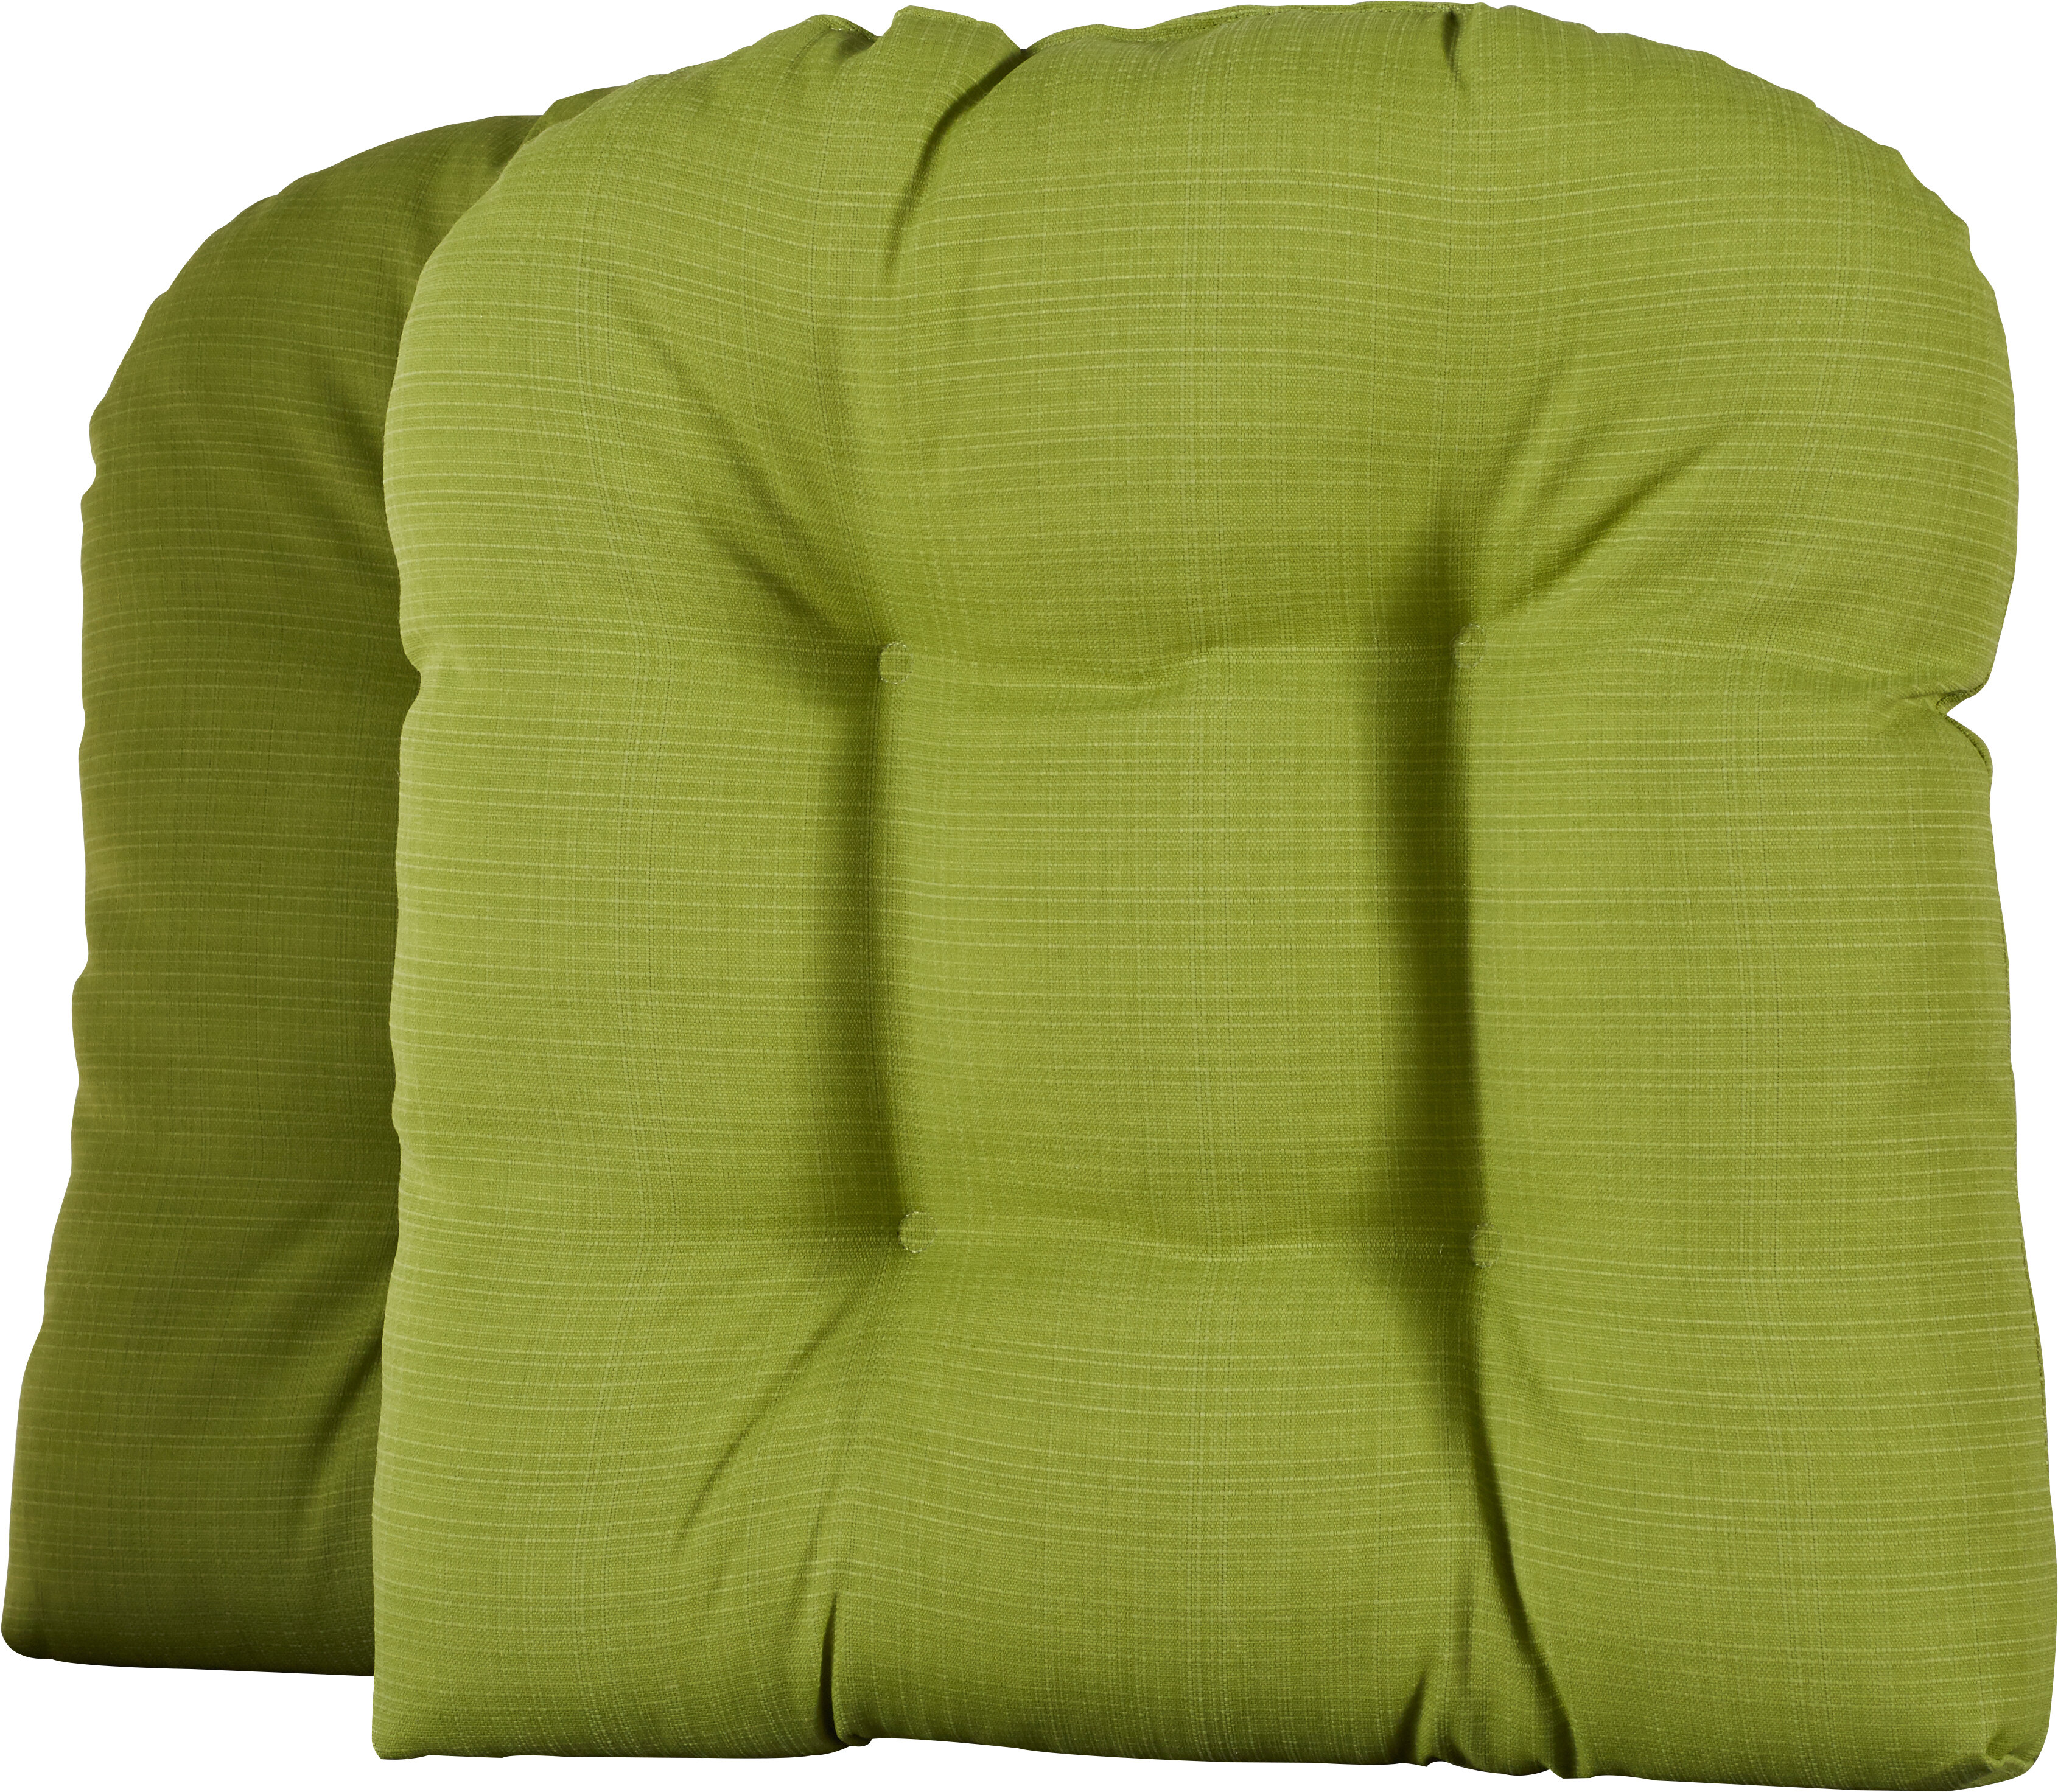 Charlton Home Tadley Indoor Outdoor Dining Chair Cushion Reviews Wayfair